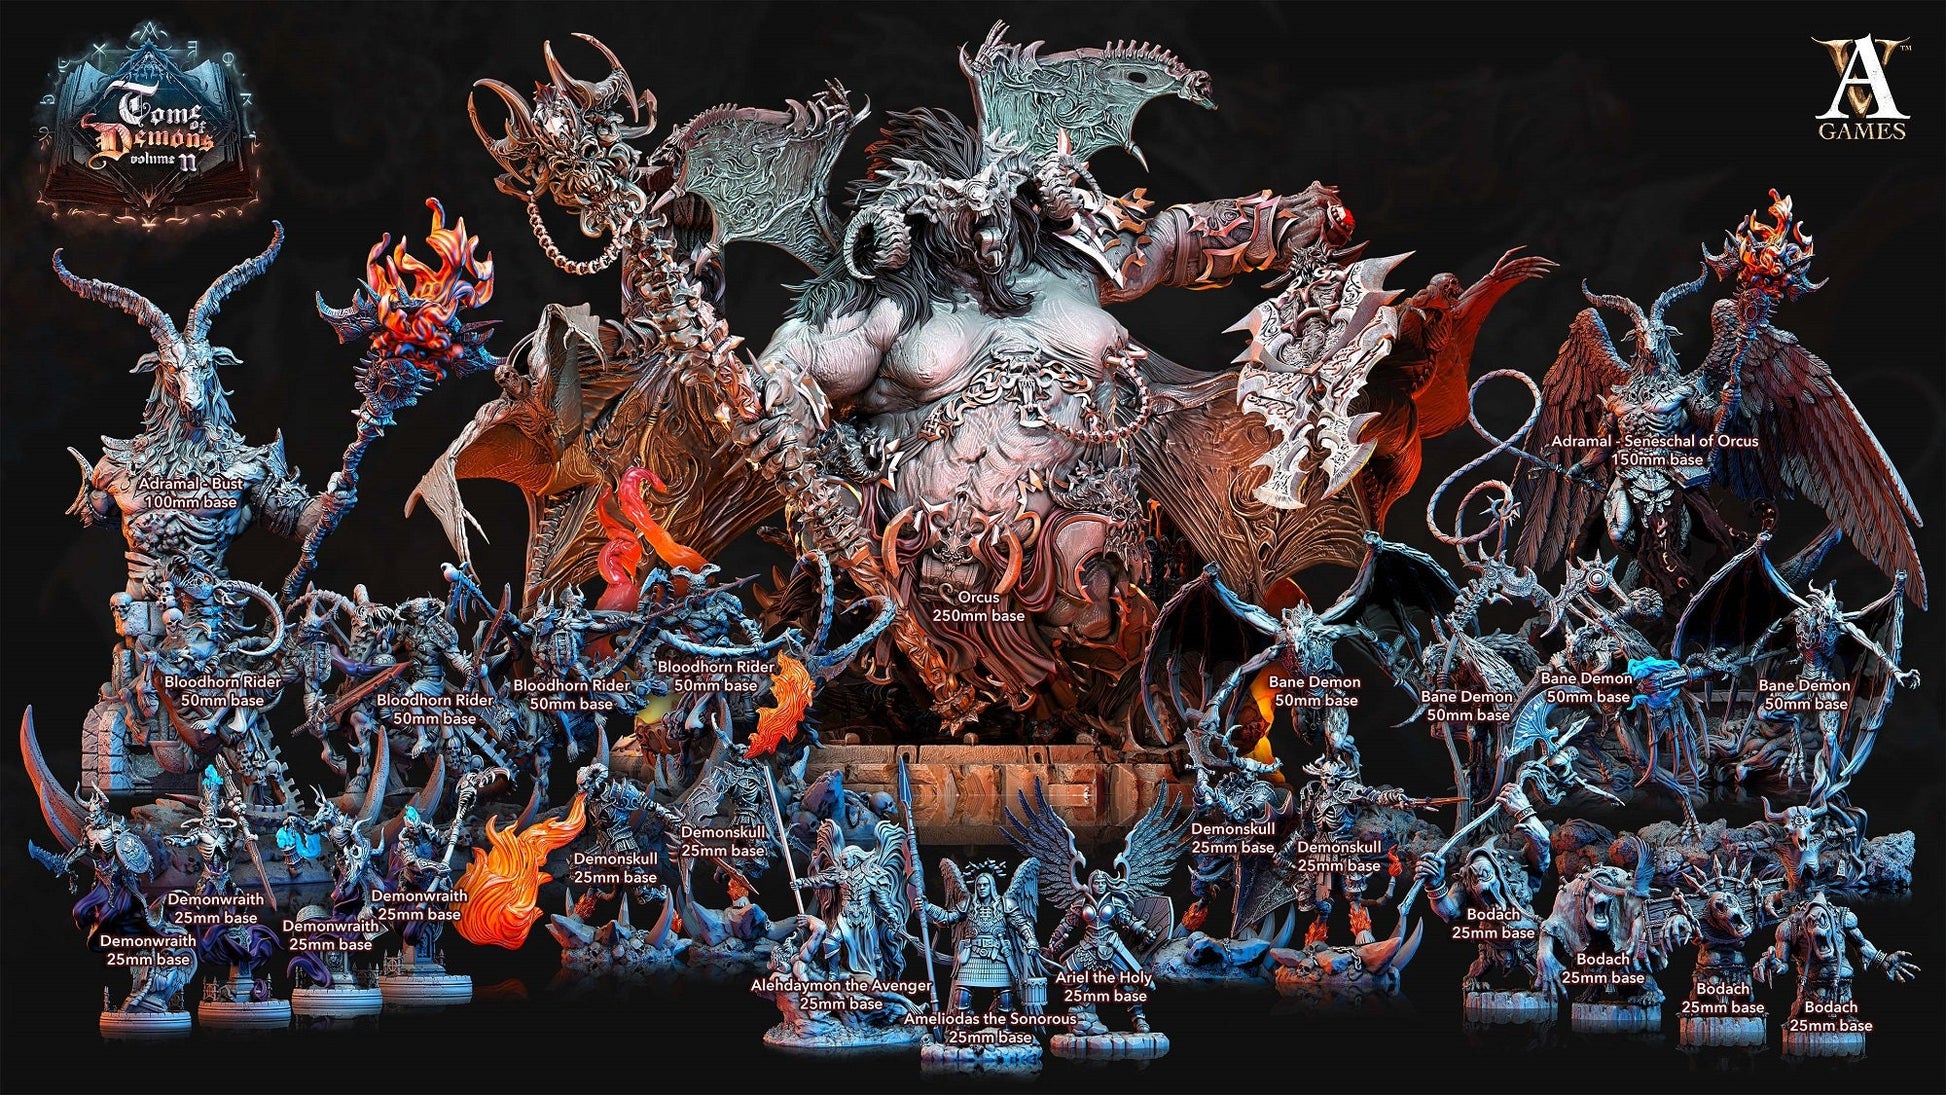 Adramal Bust - Archvillain Games Printed Miniatures | Dungeons & Dragons | Pathfinder | Tabletop